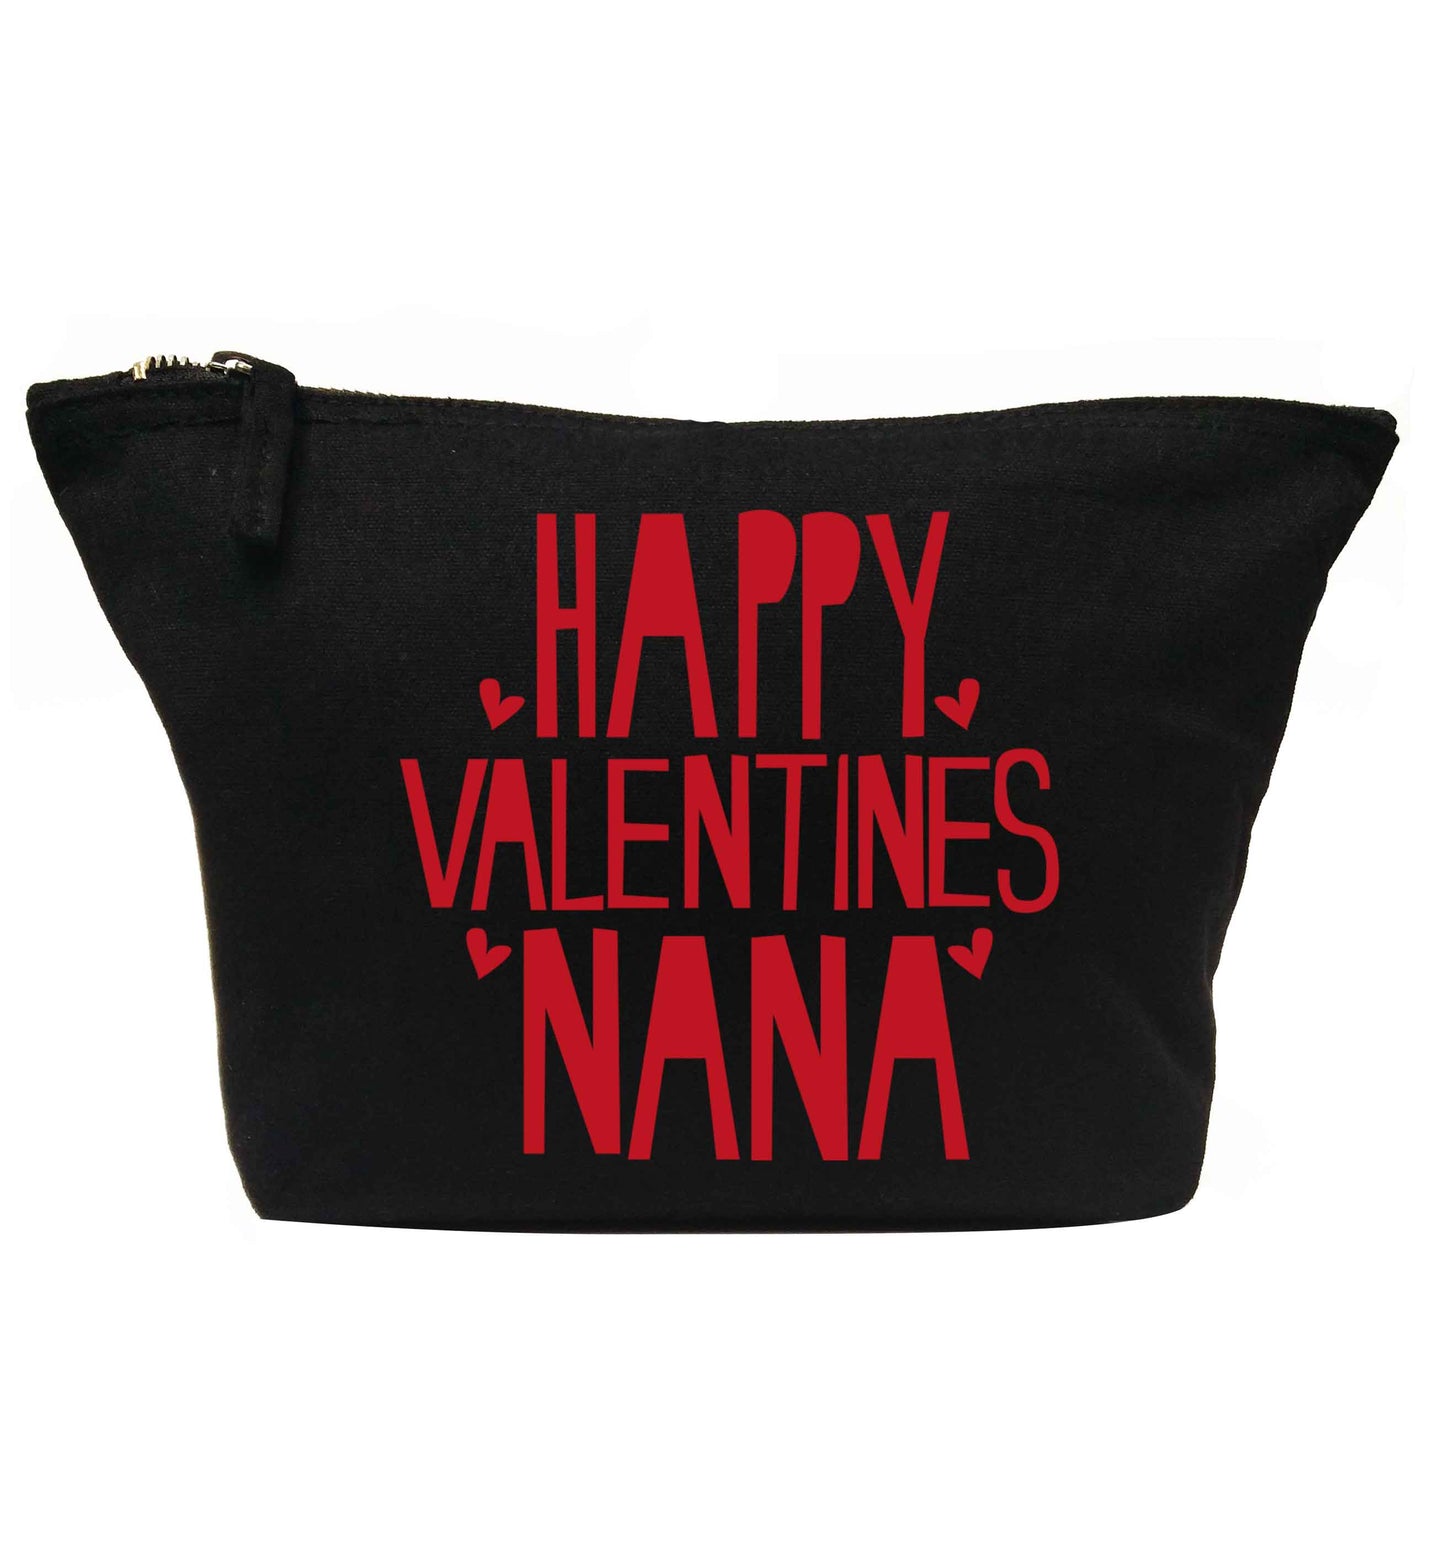 Happy valentines nana | Makeup / wash bag